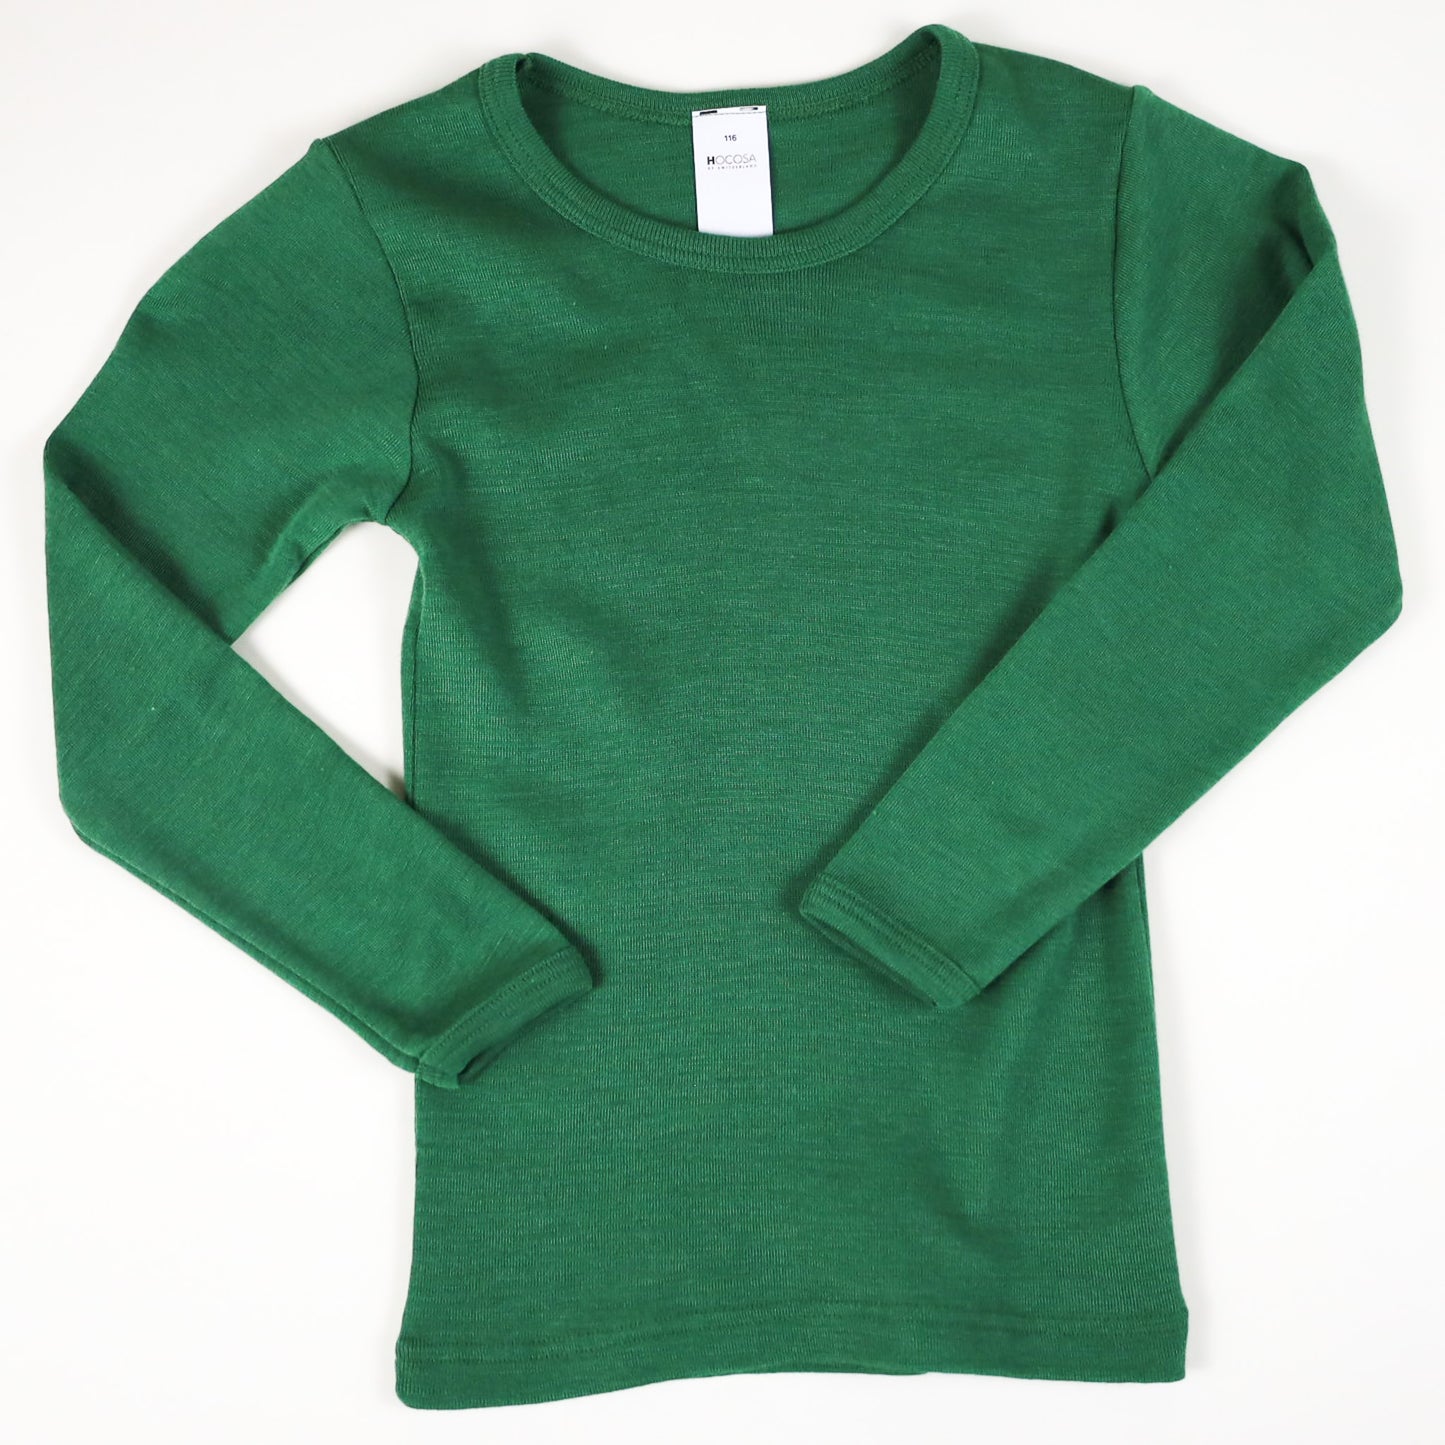 Hocosa Child Long Sleeve Shirt, Wool/Silk